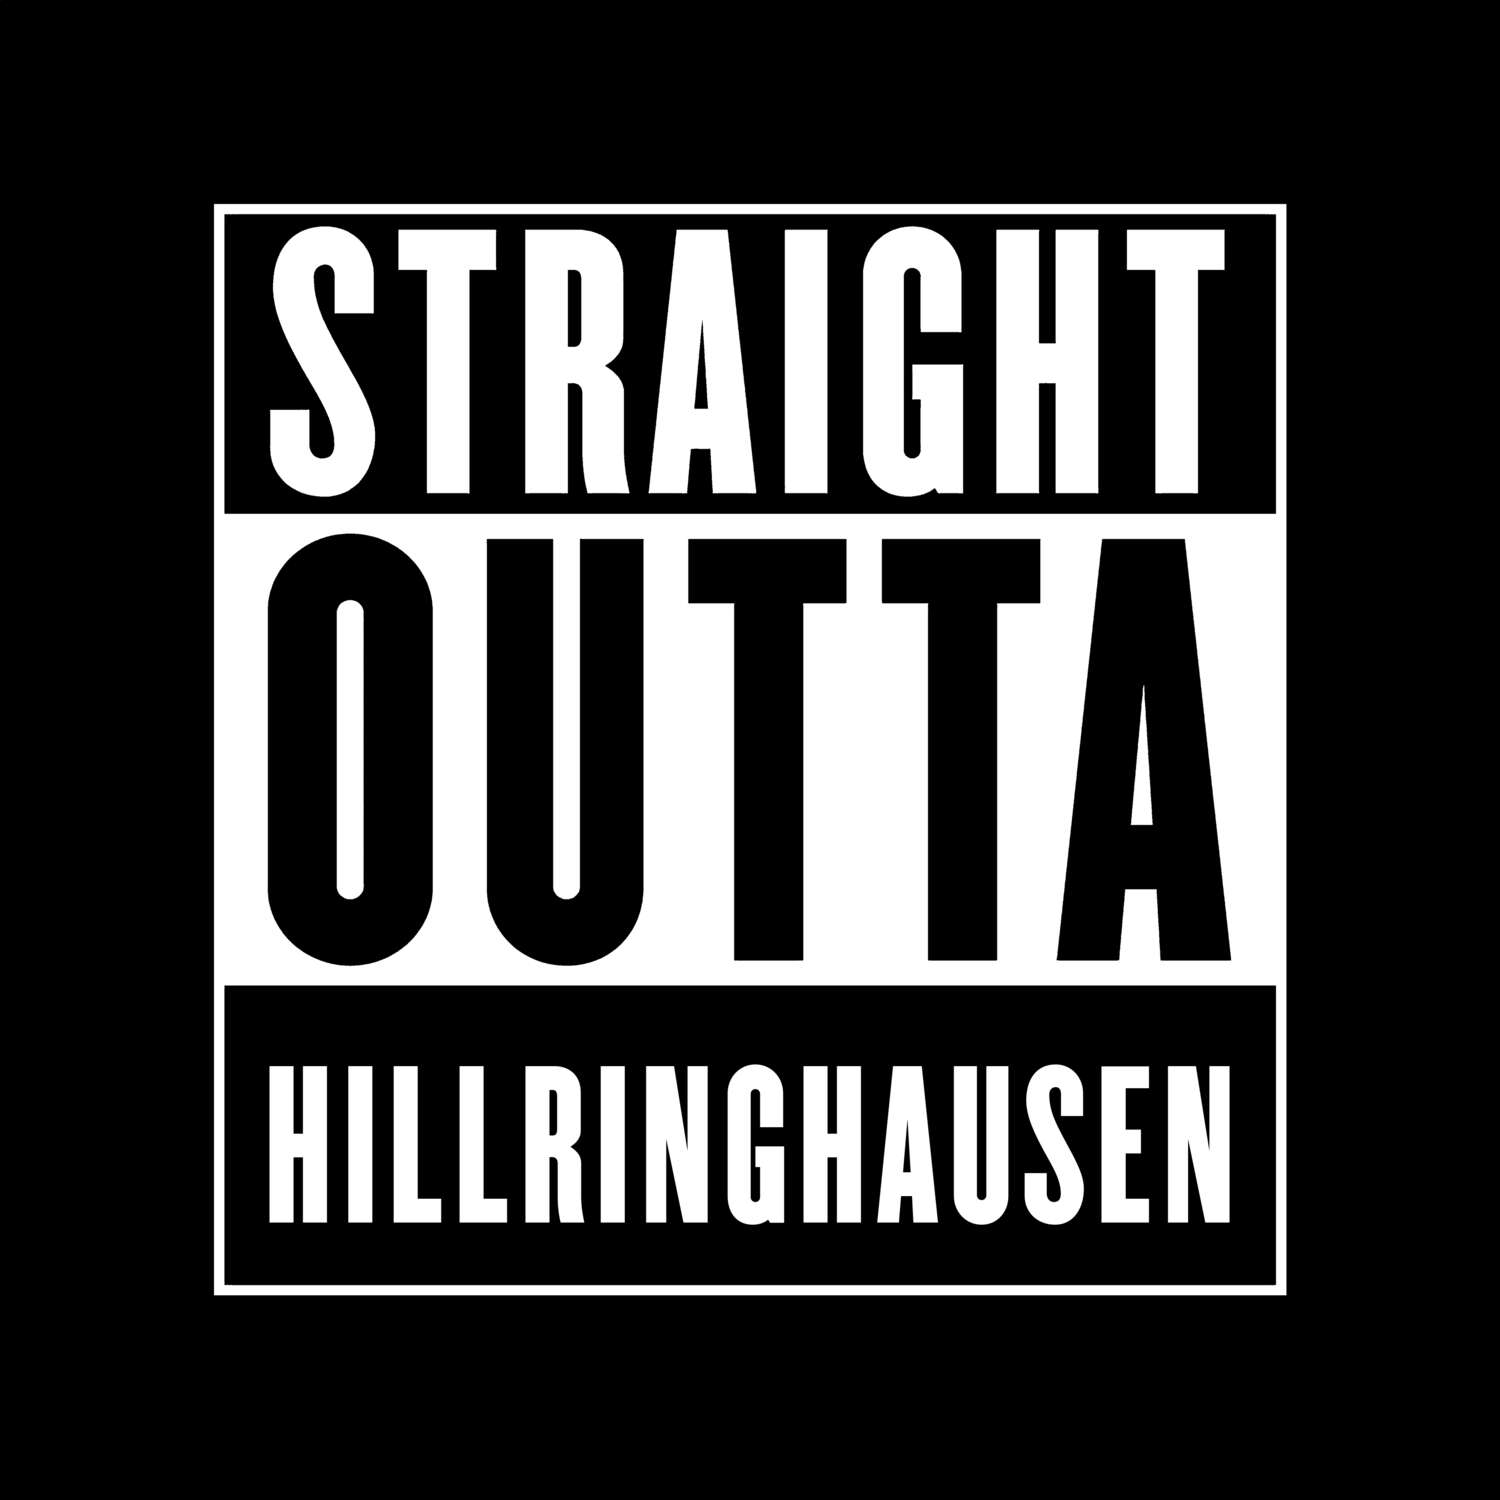 Hillringhausen T-Shirt »Straight Outta«